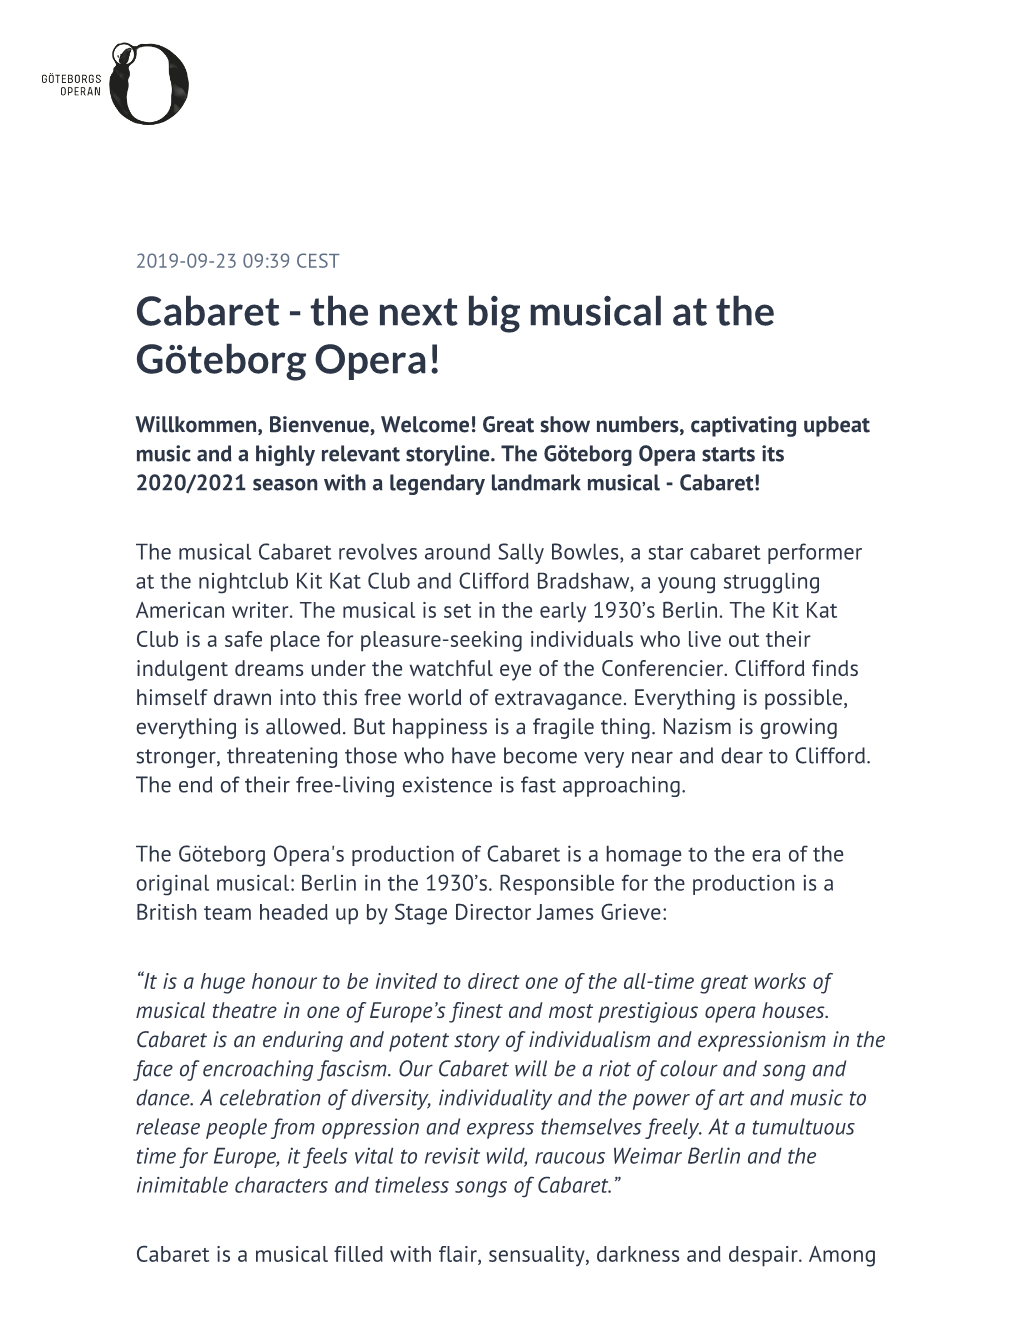 Cabaret - the Next Big Musical at the Göteborg Opera!